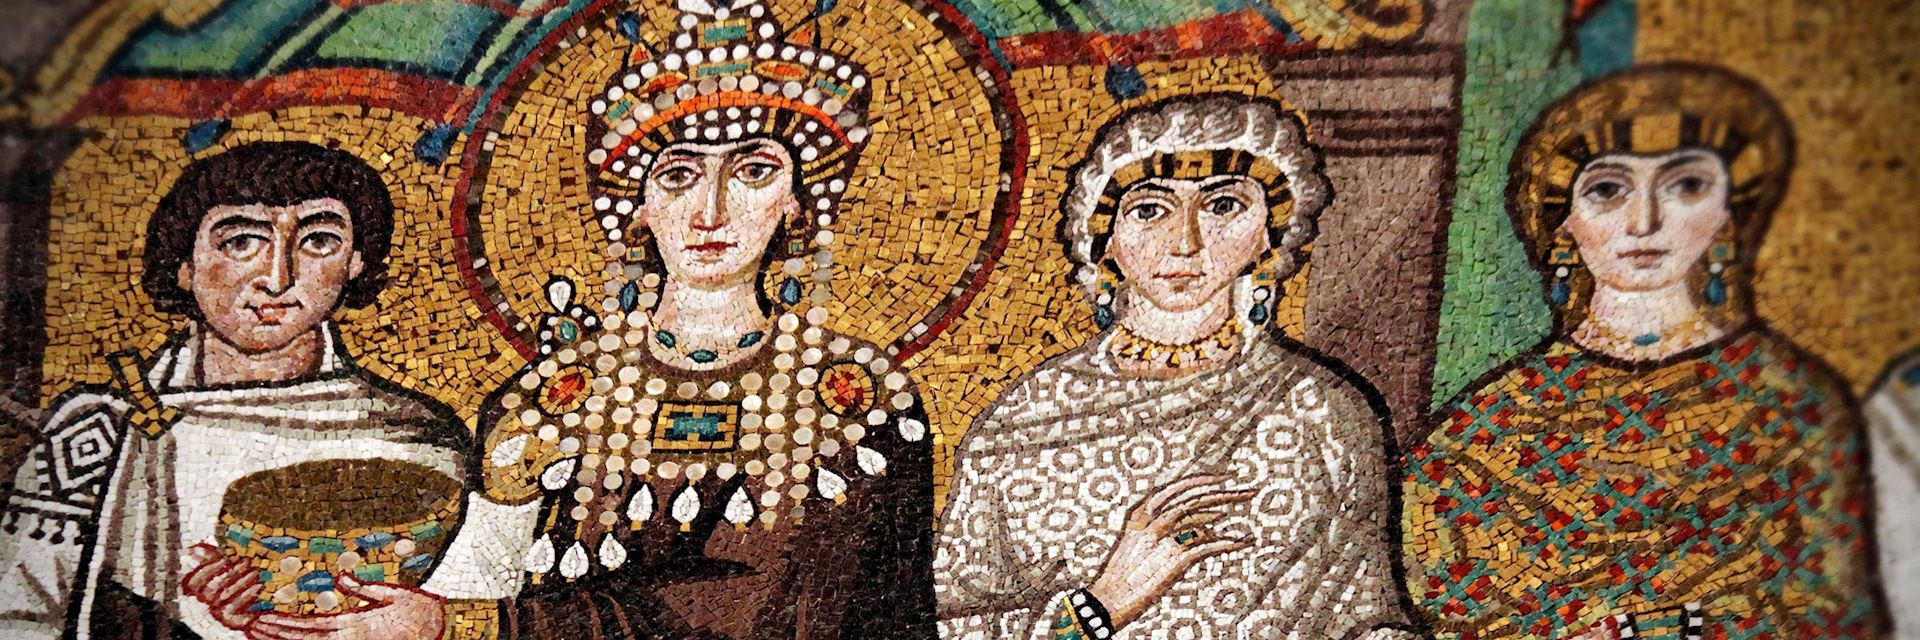 Empress Theodora, Ravenna